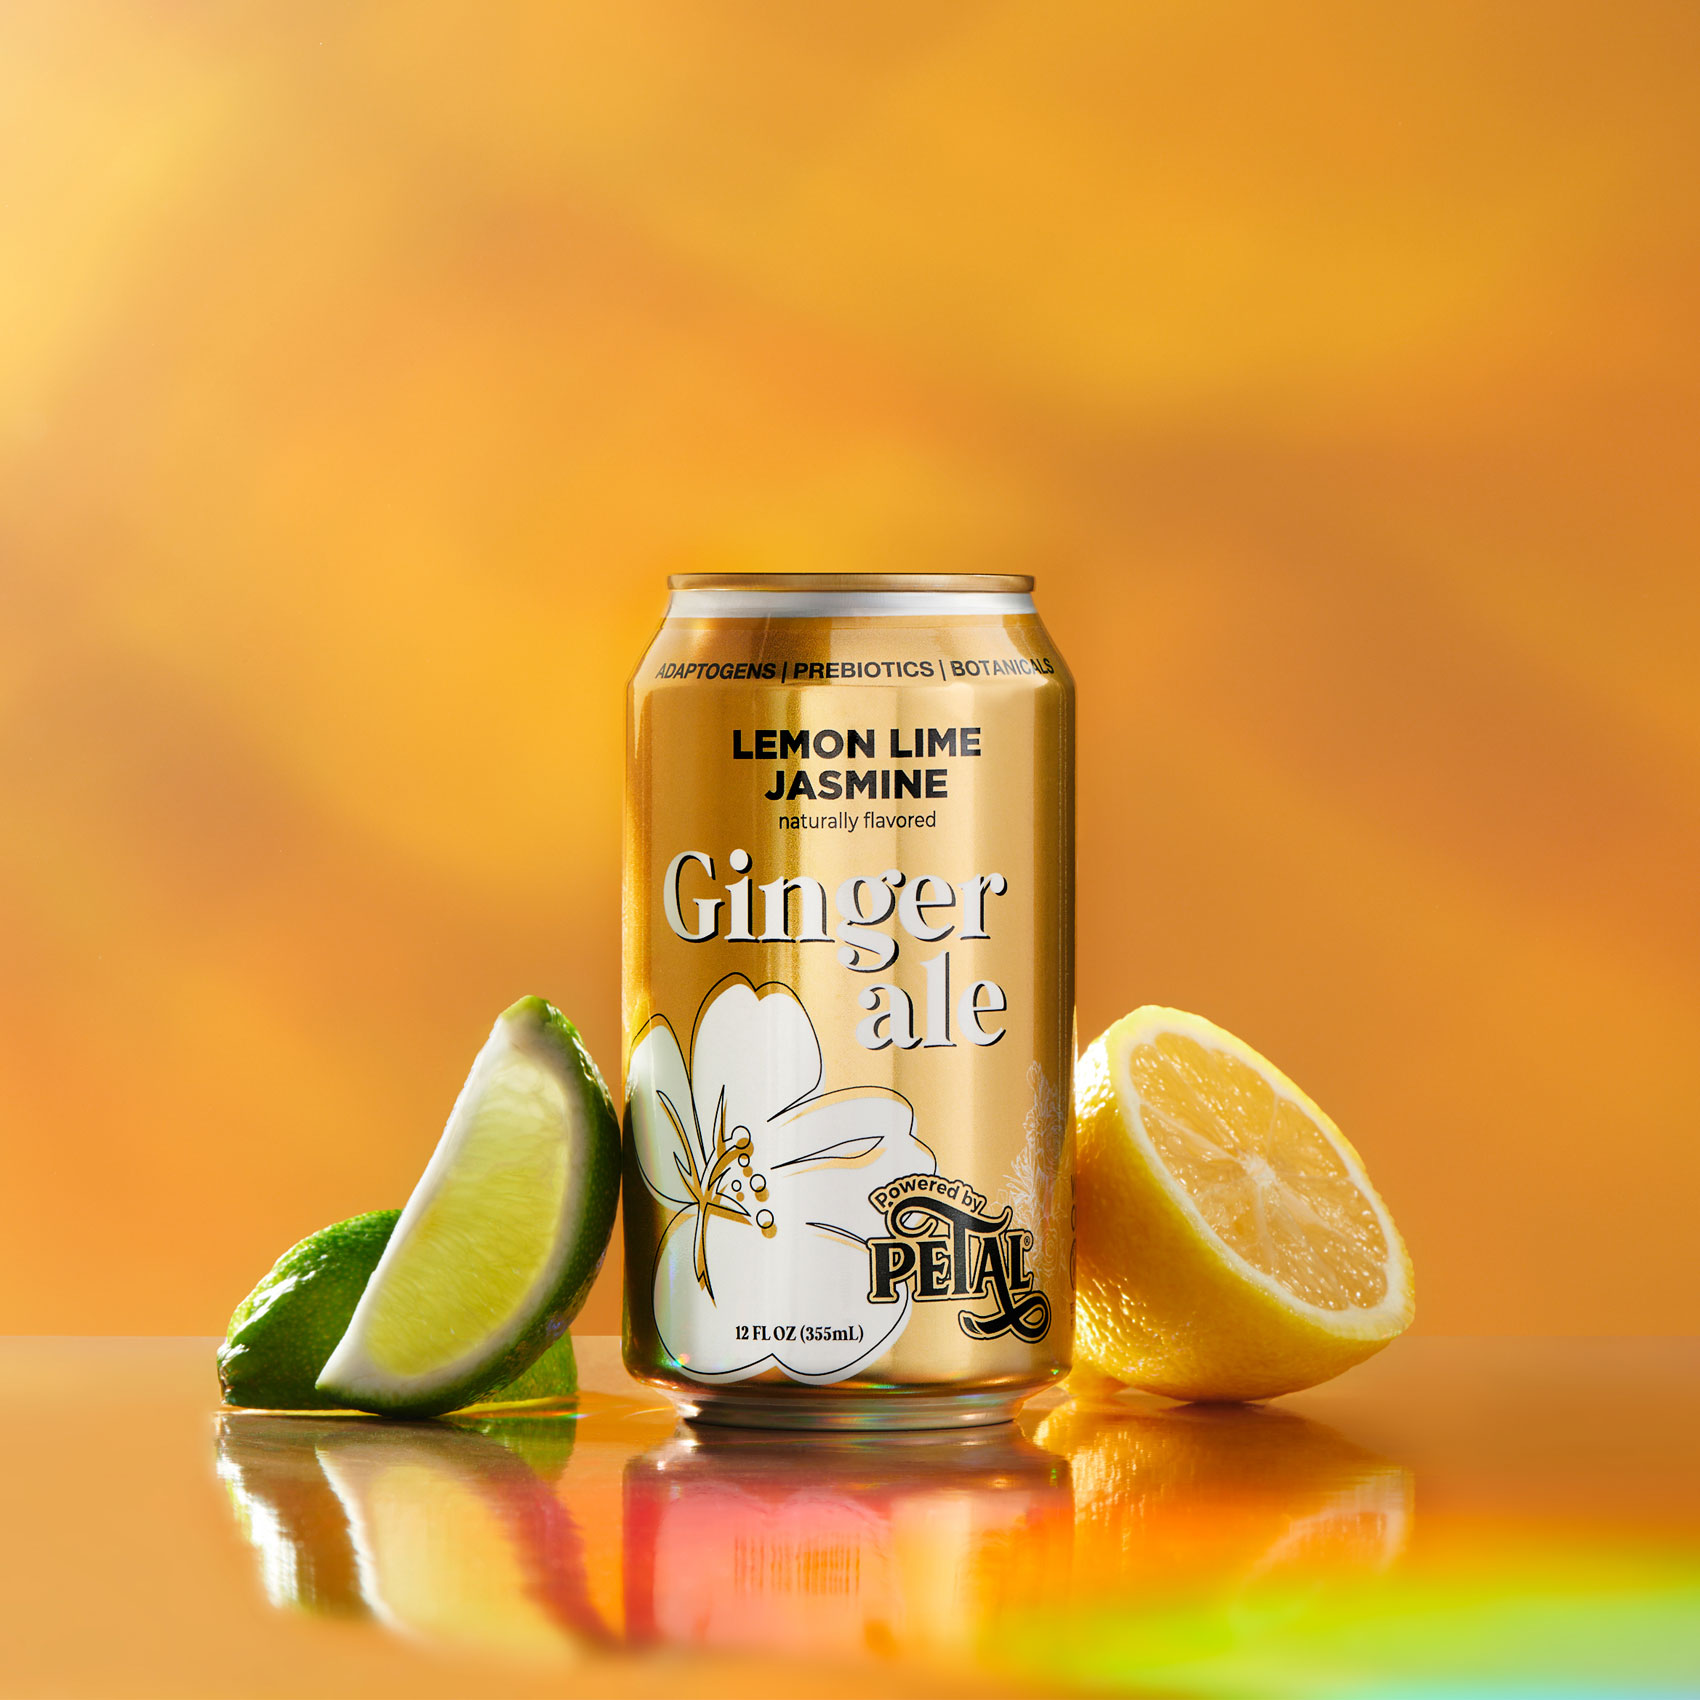 Can of lemon lime jasmine ginger ale